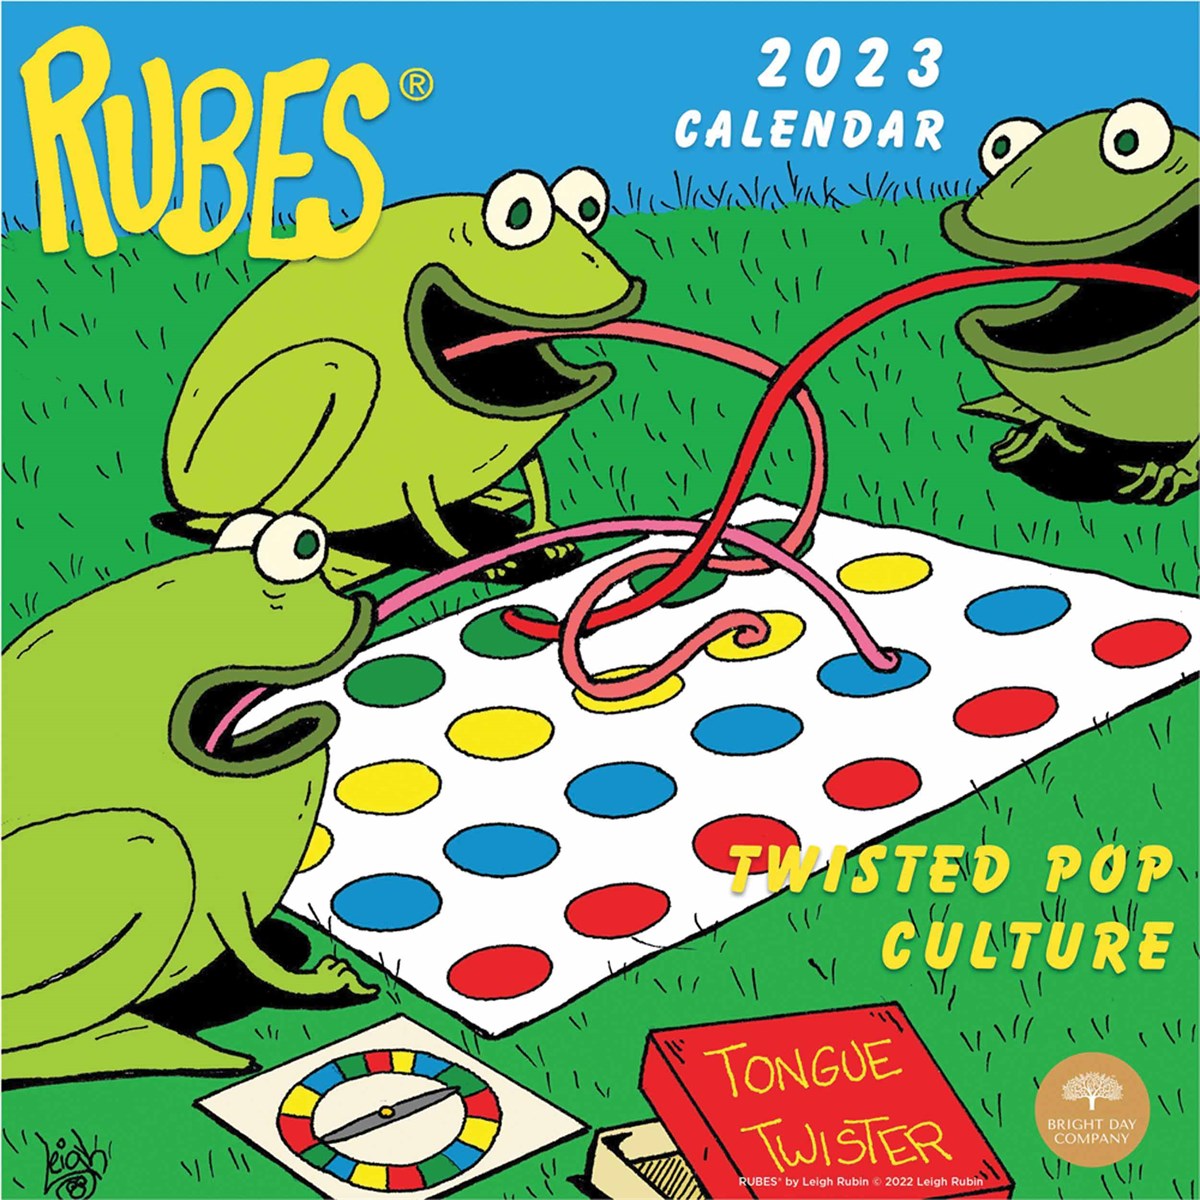 Rubes Twisted Pop Culture 2023 Calendars